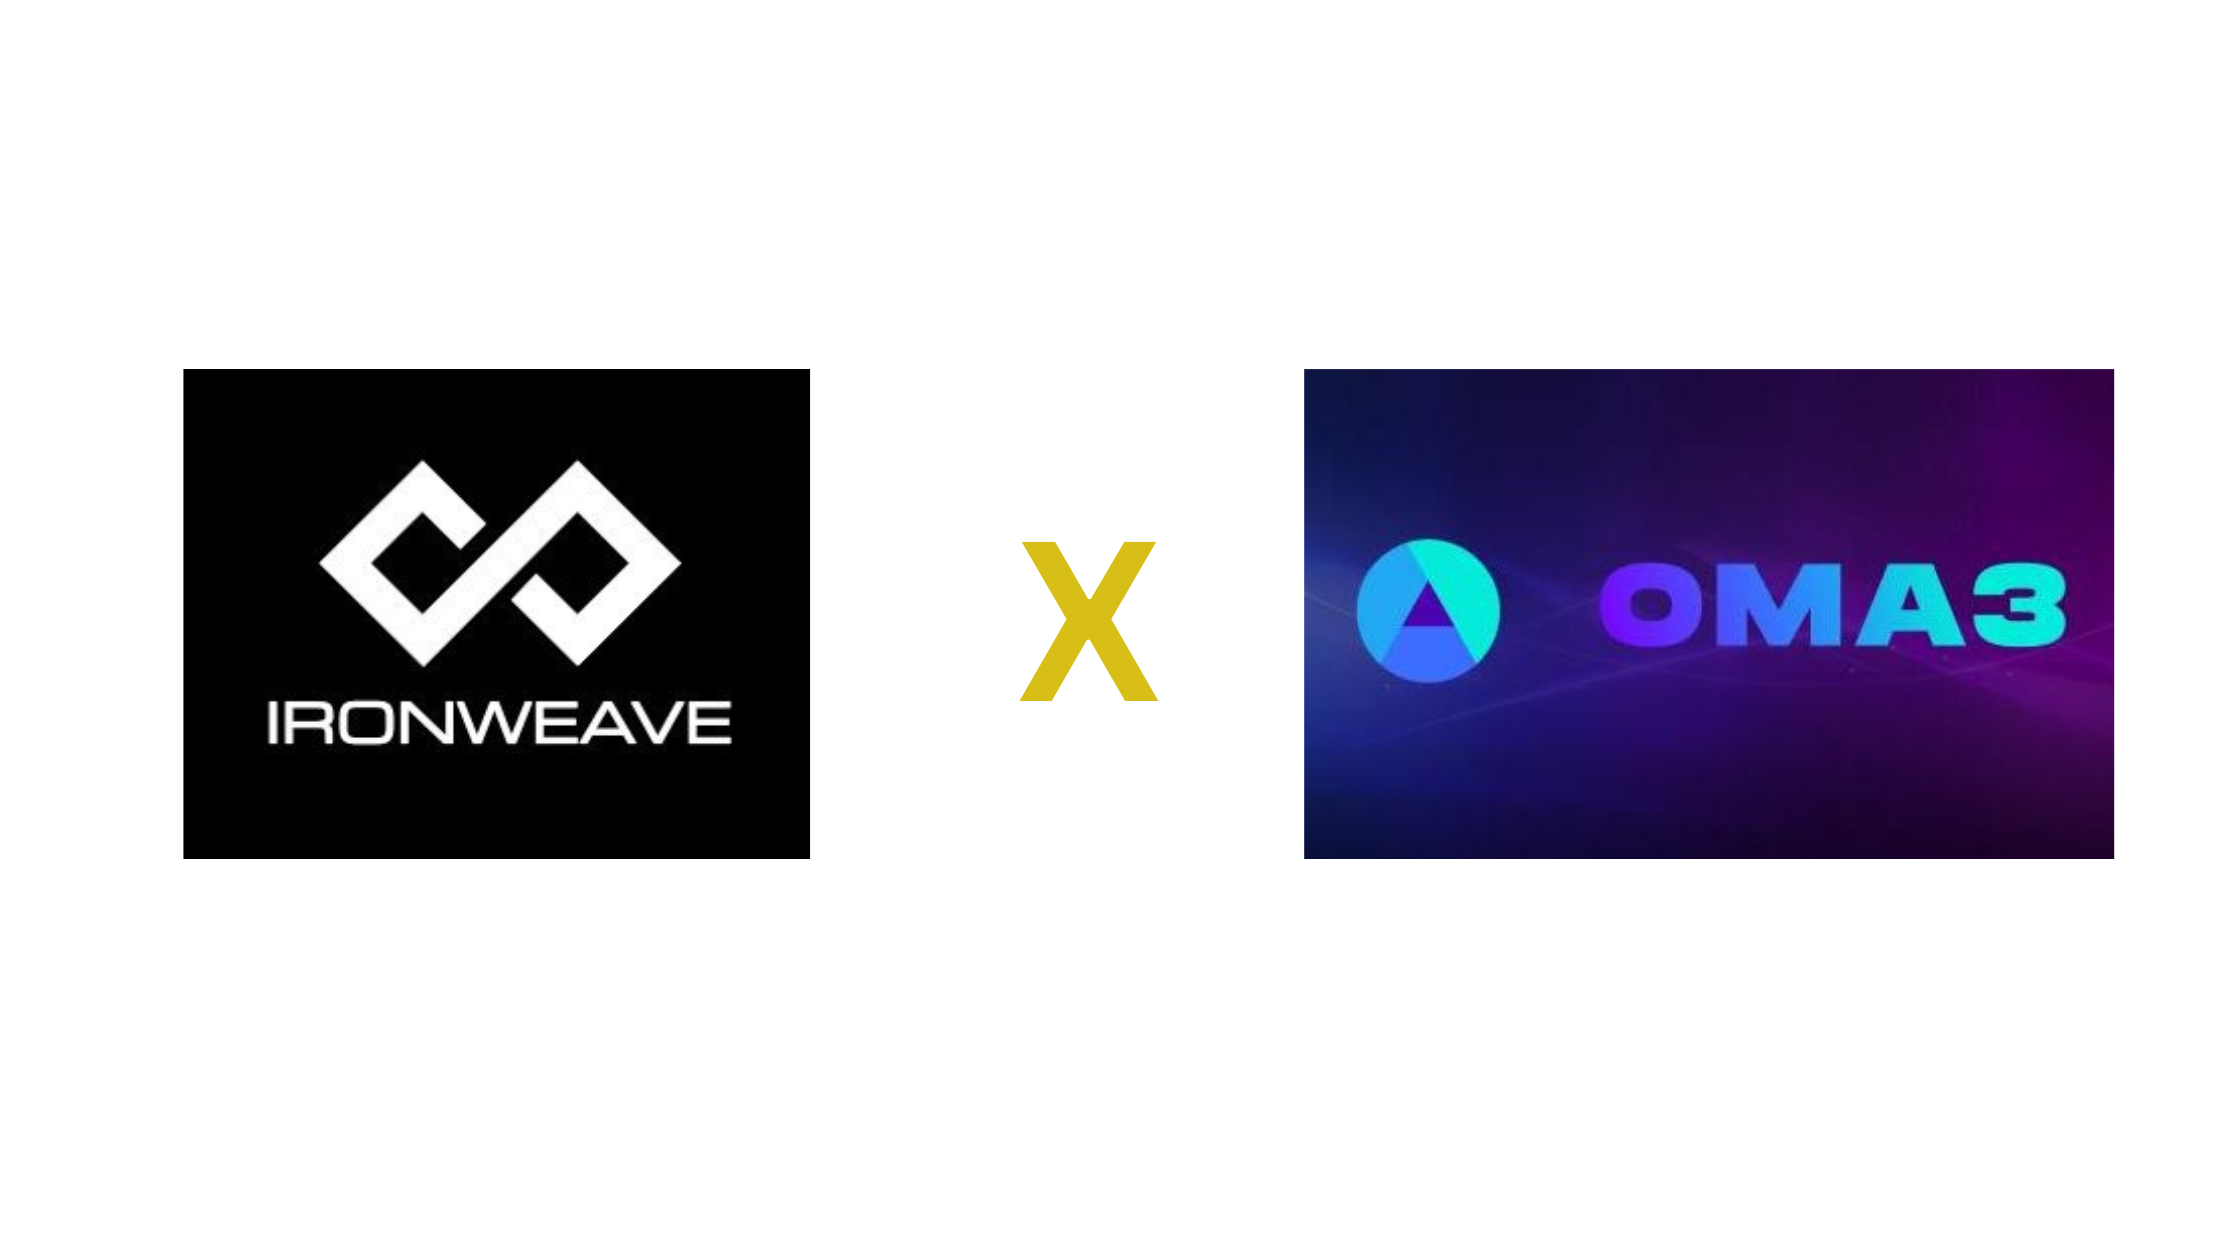 IronWeave and OMA3 logos